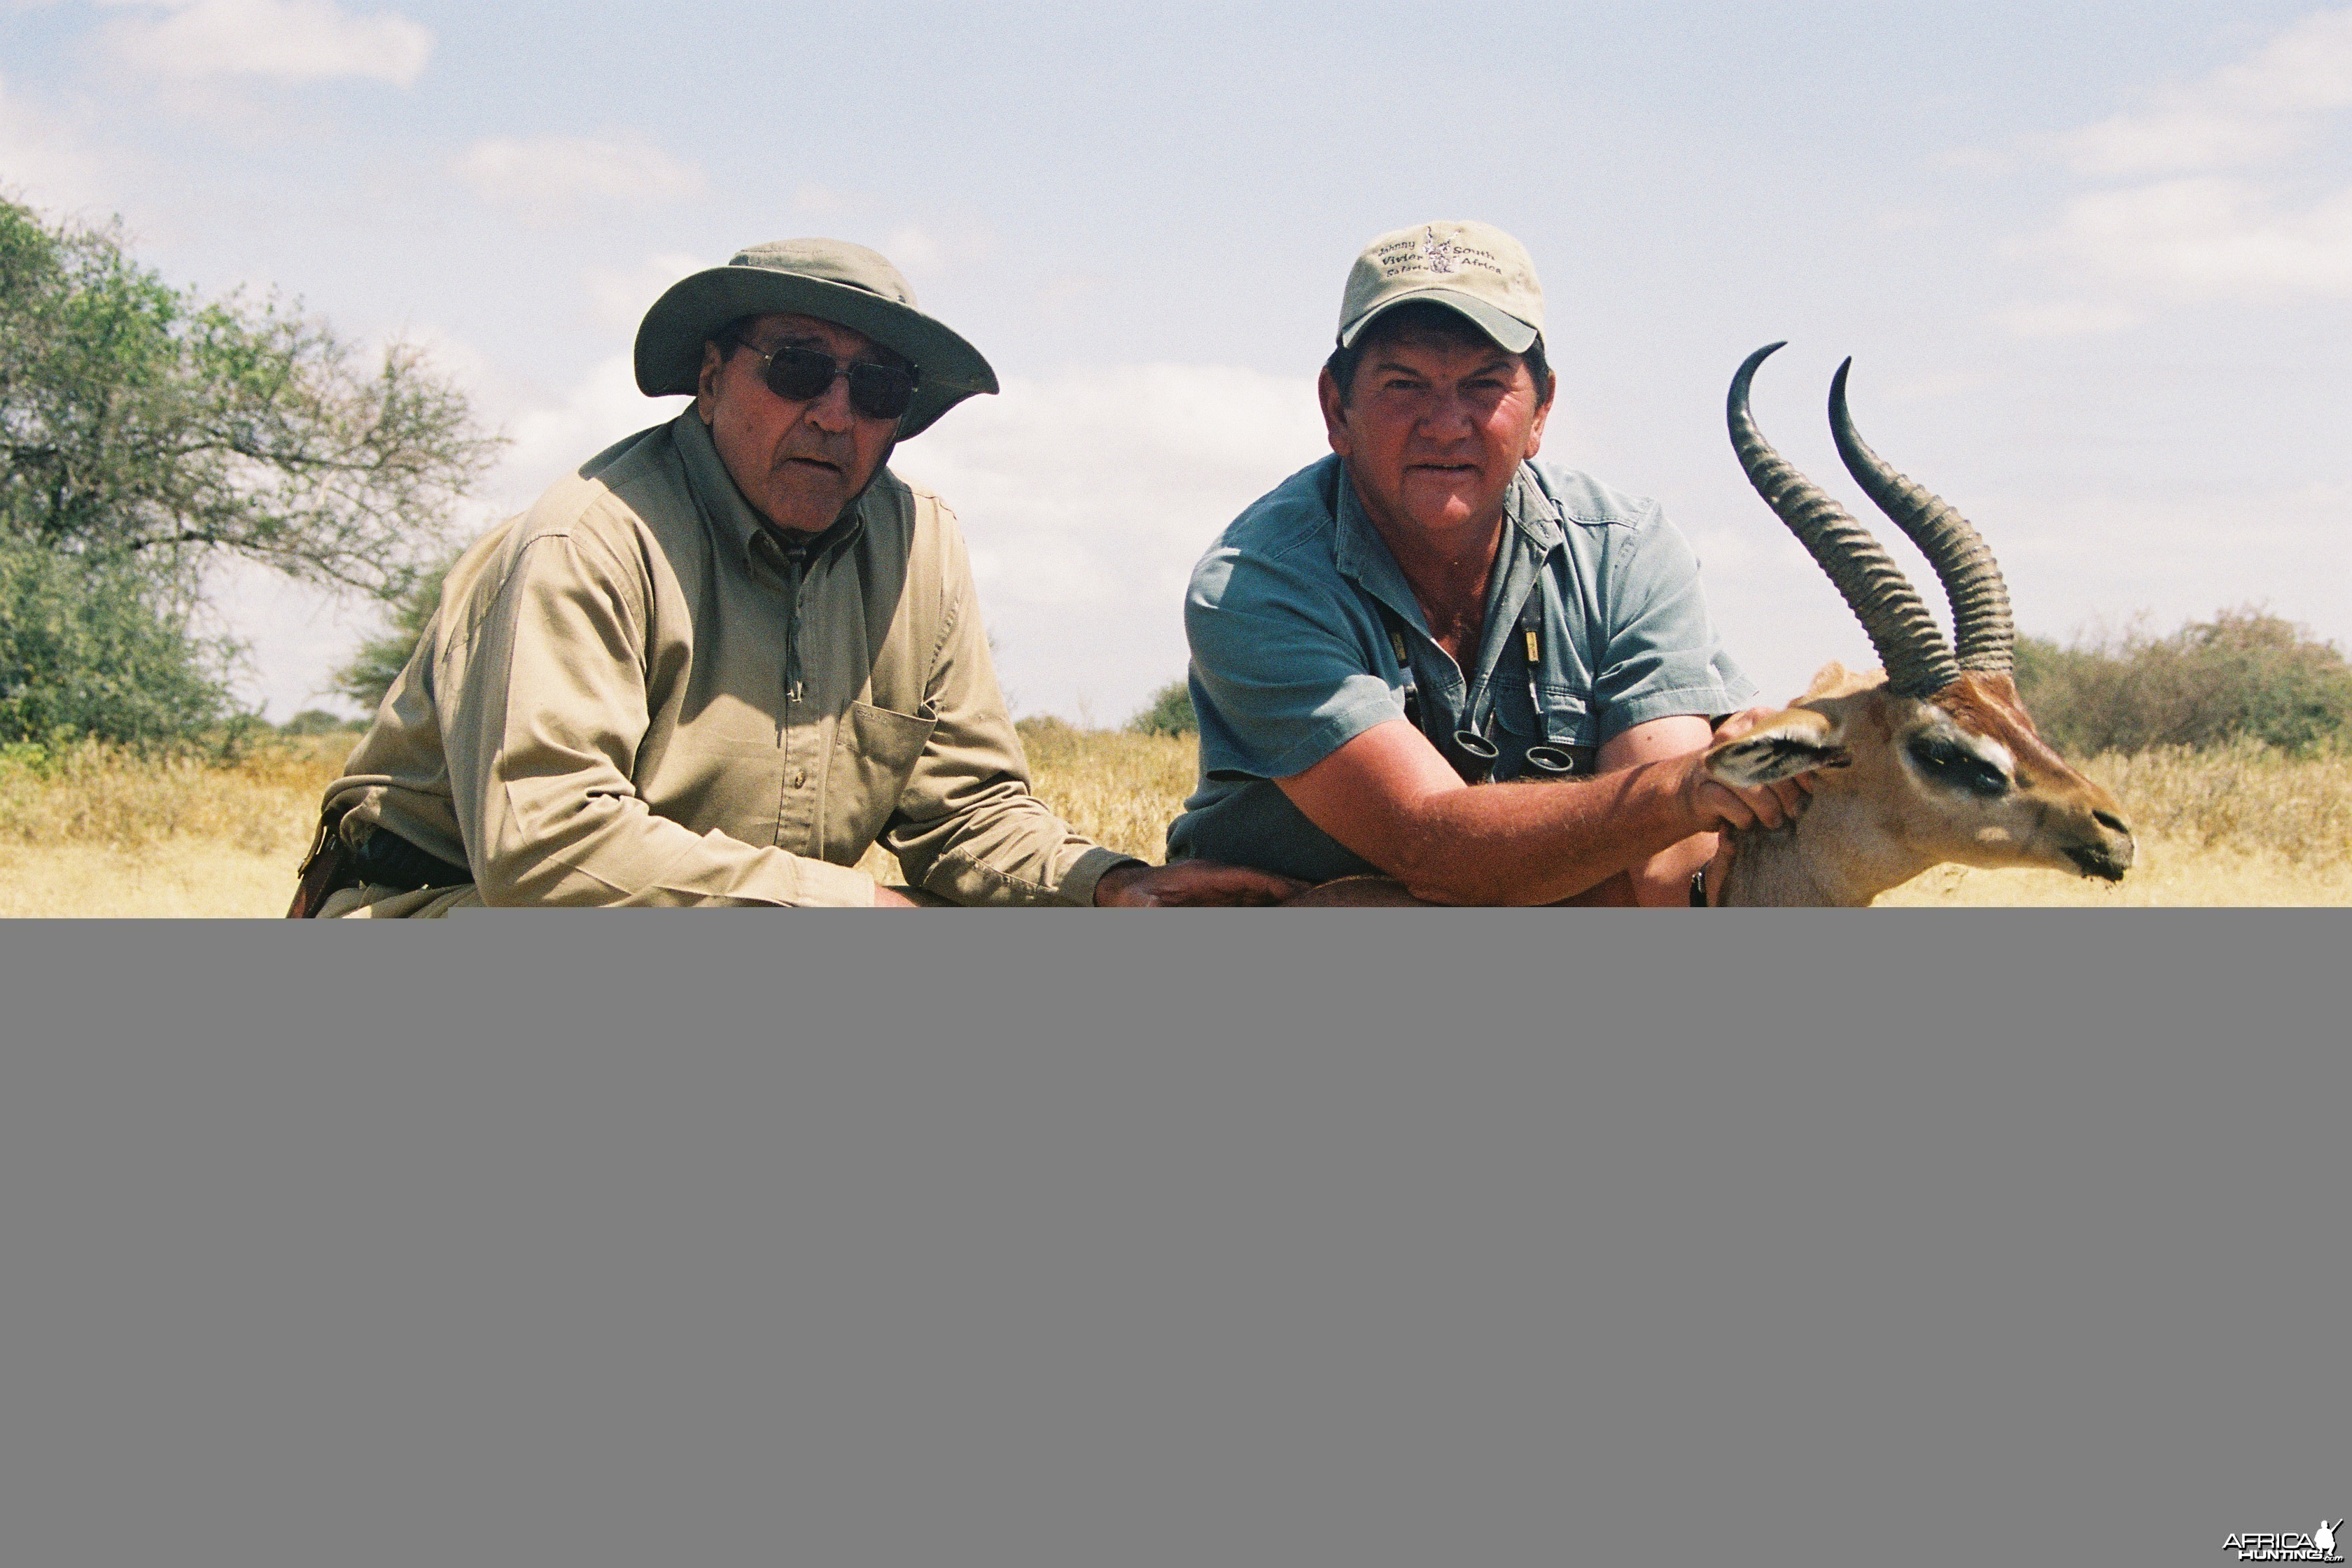 Hunting Gerenuk with Wintershoek Johnny Vivier Safaris in SA